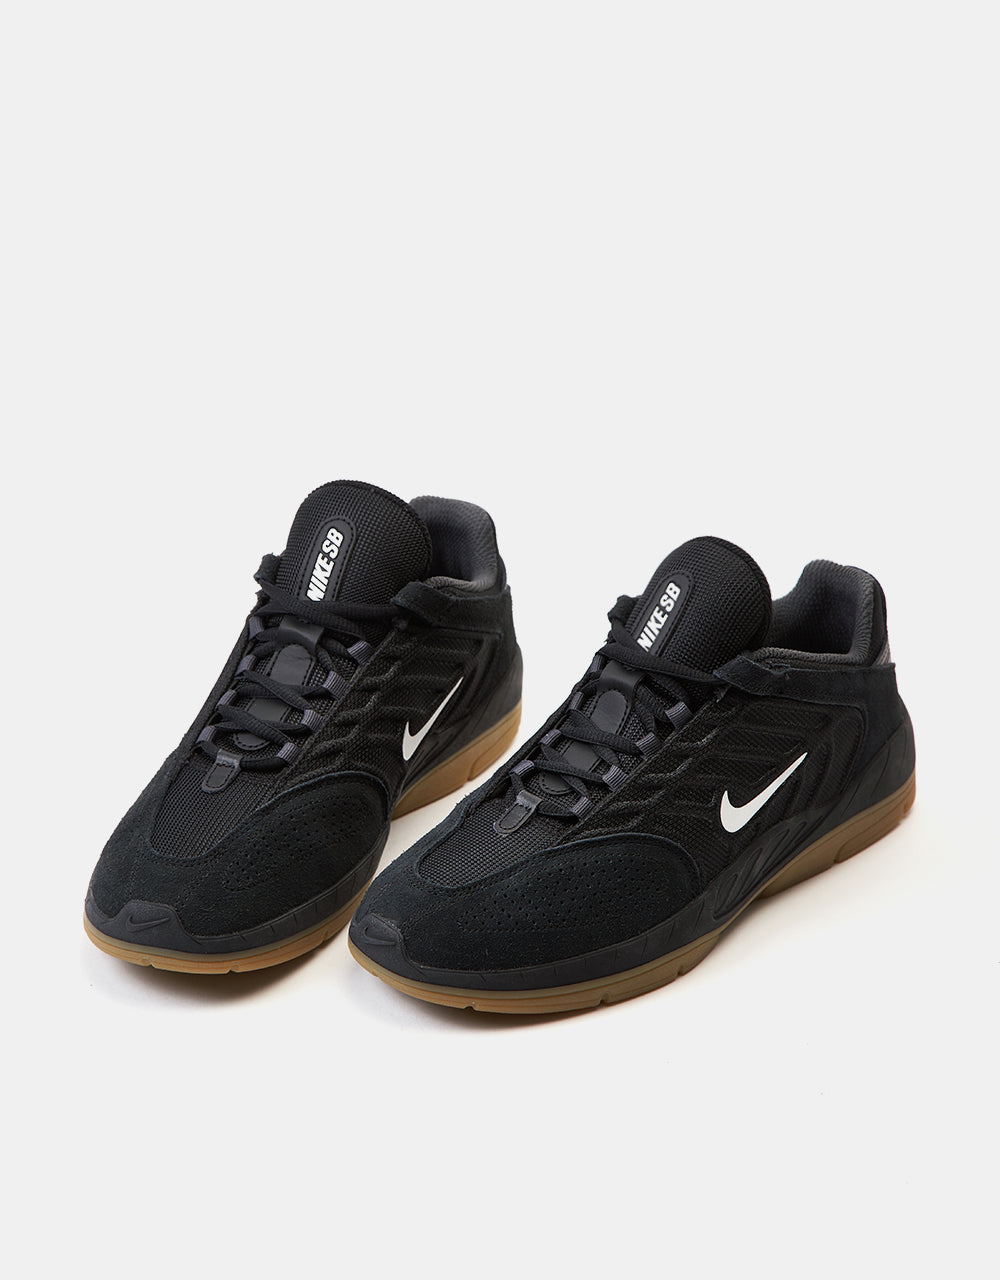 Nike SB Vertebrae Skate Shoes - Black/Summit White-Anthracite-Black-Gum Lt Brown